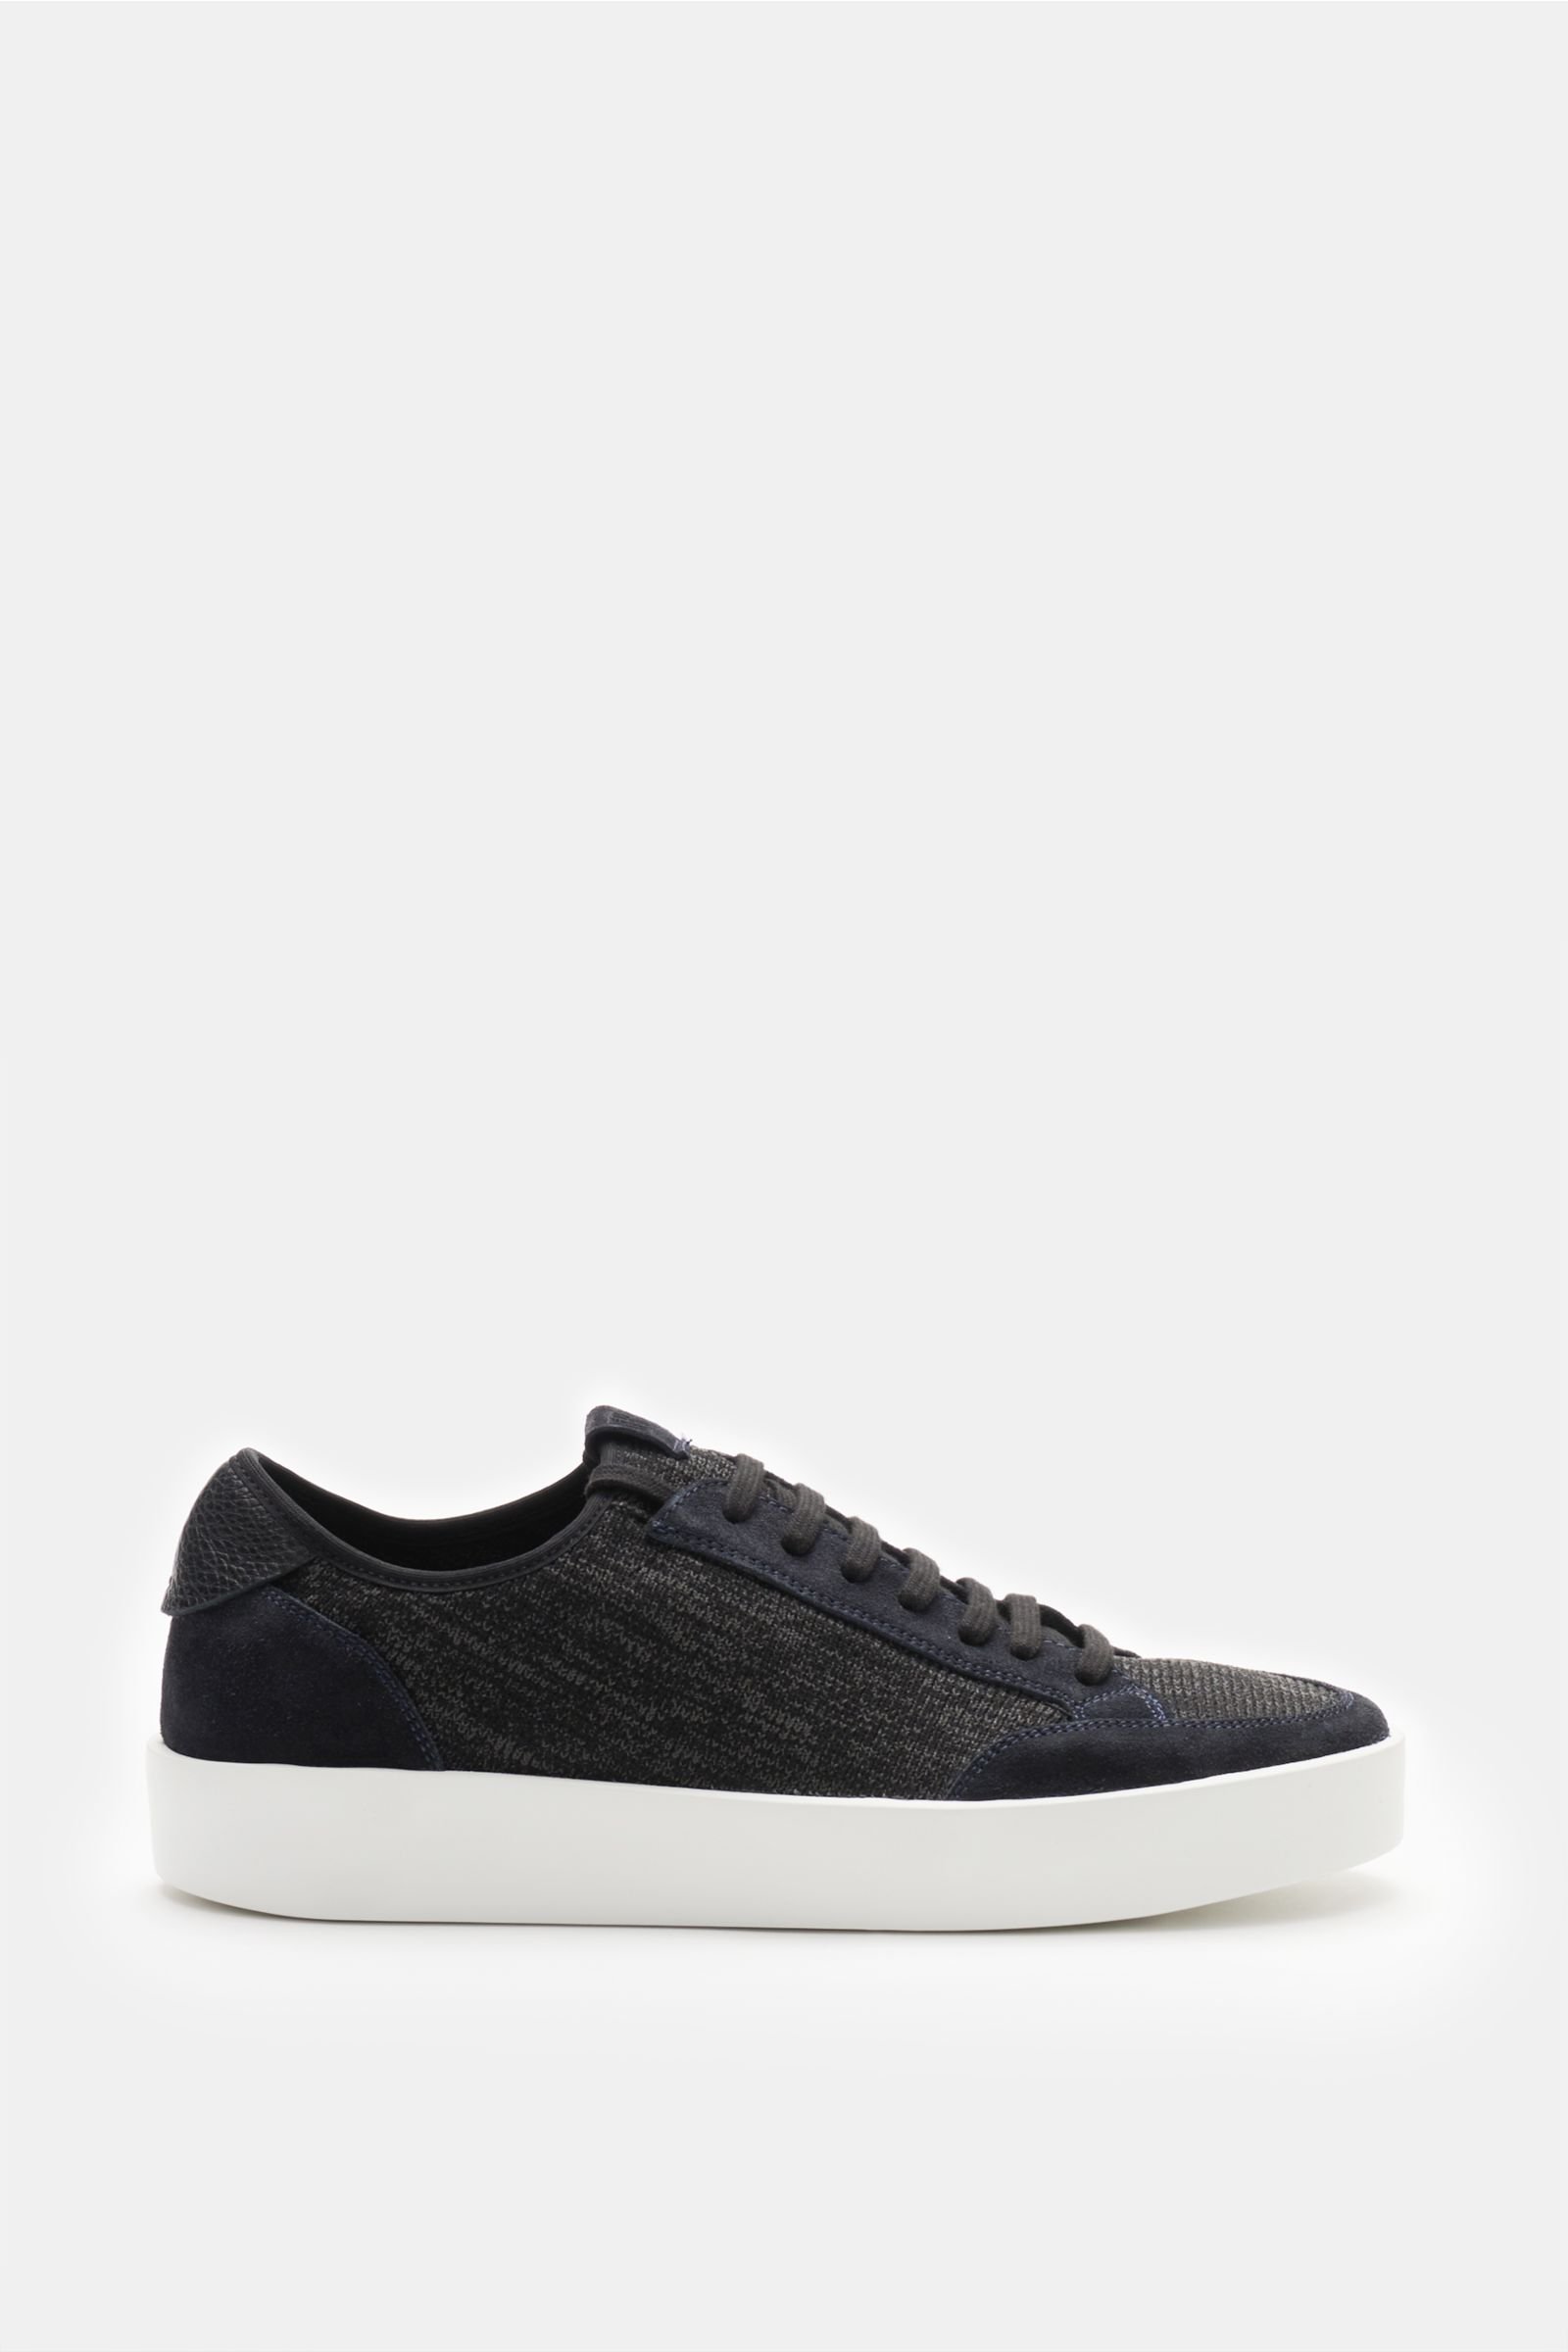 Sneakers navy/dark grey